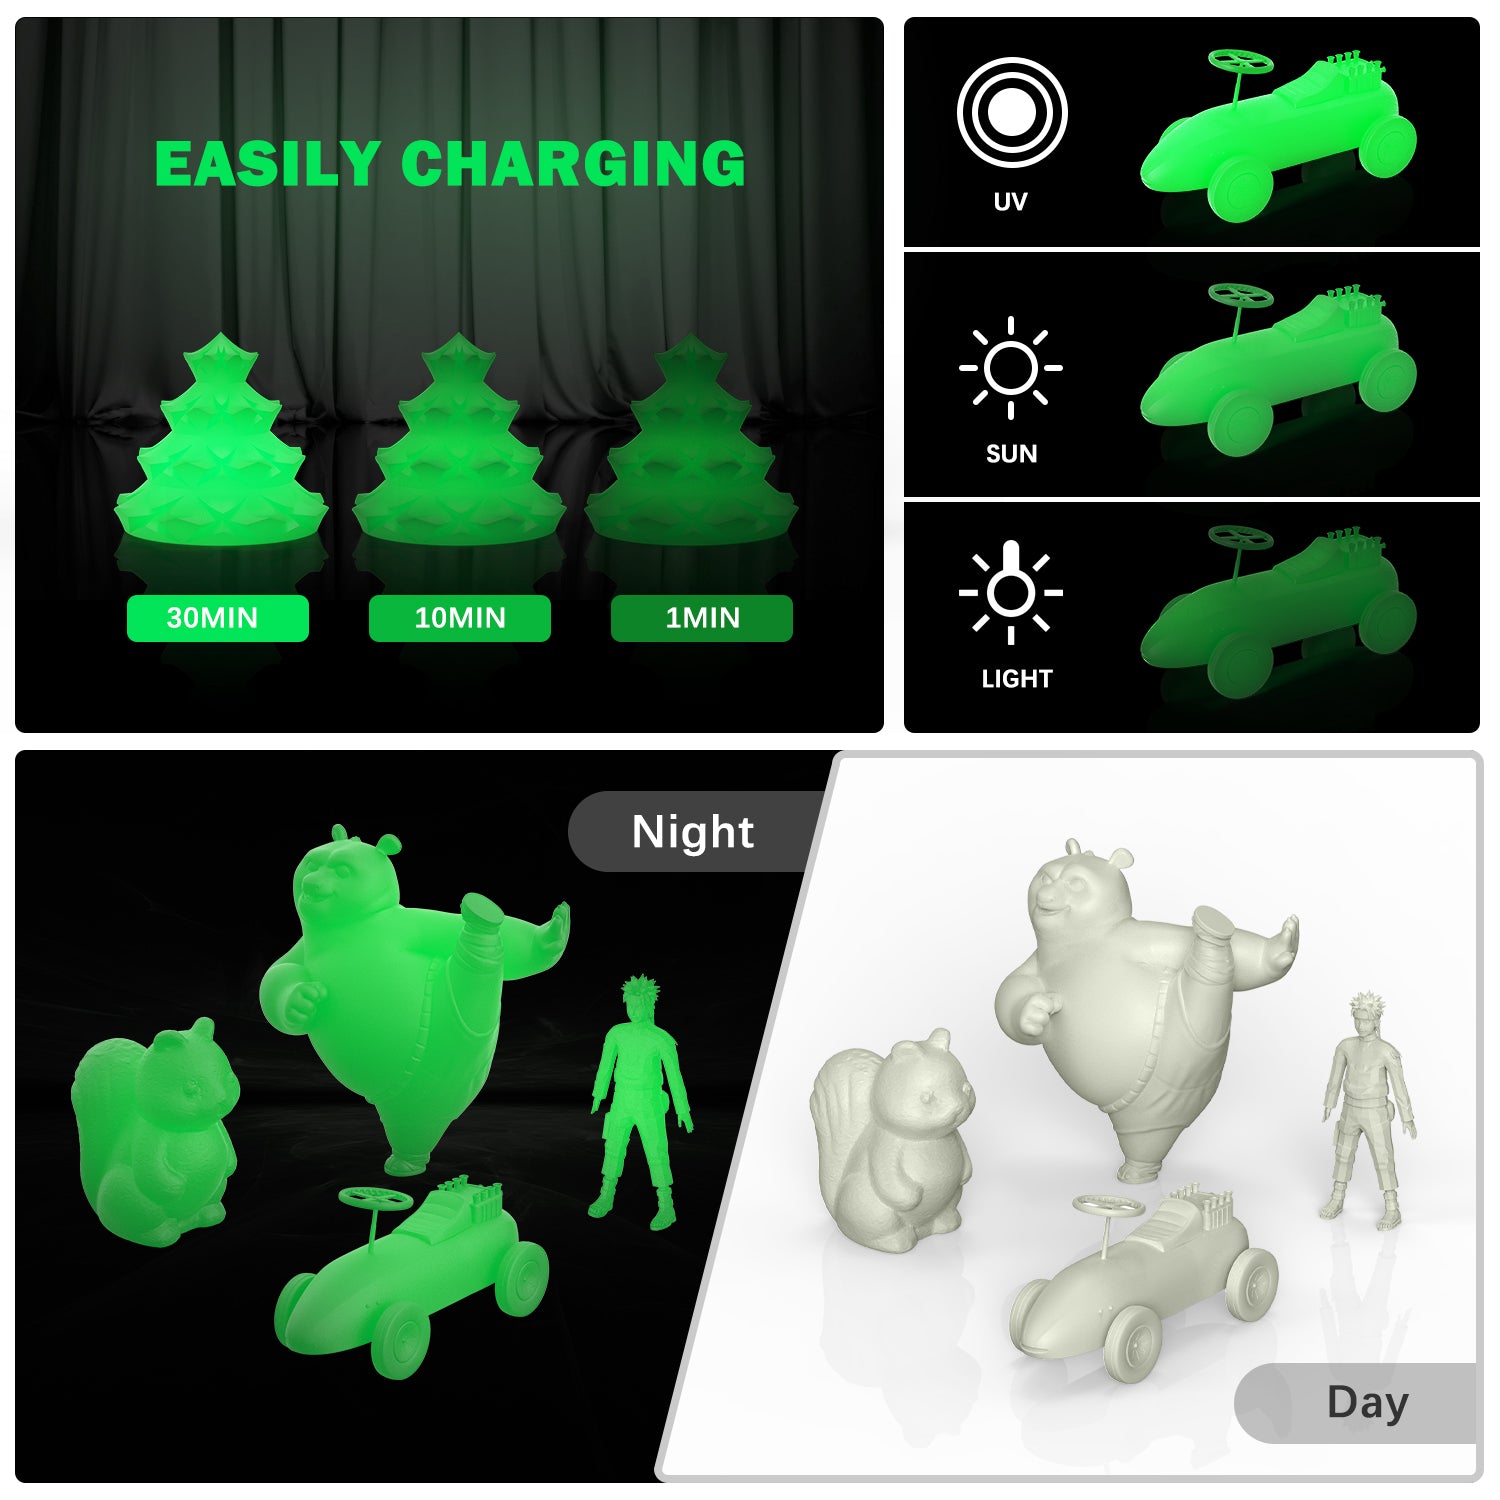 ERYONE Glow Green in The Dark PLA 3D Printer Filament 1.75mm, Dimensional Accuracy +/- 0.05 mm, 1kg (2.2LBS) / Spool